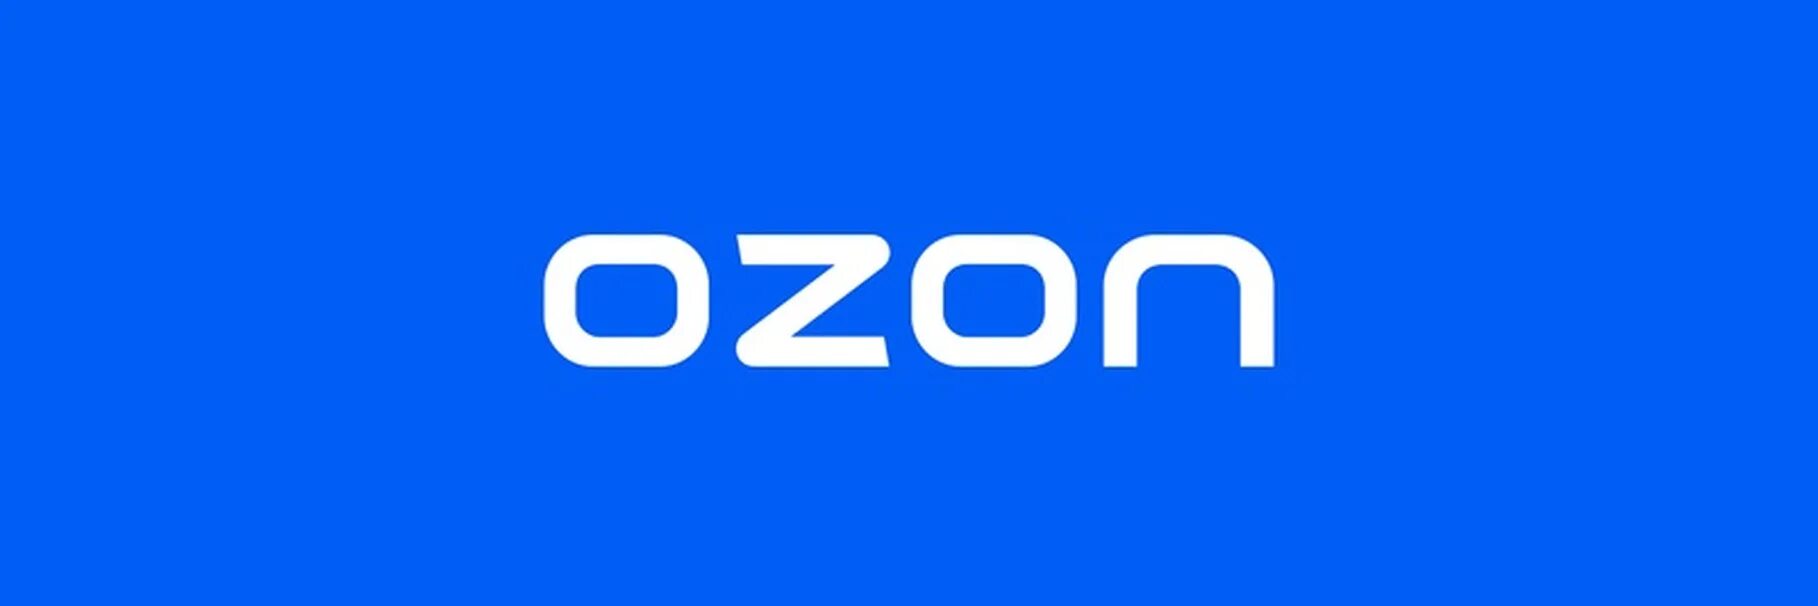 Озон логотип. Надпись Озон. Магазин Озон логотип. Логотип Озон квадратный. Озон бади